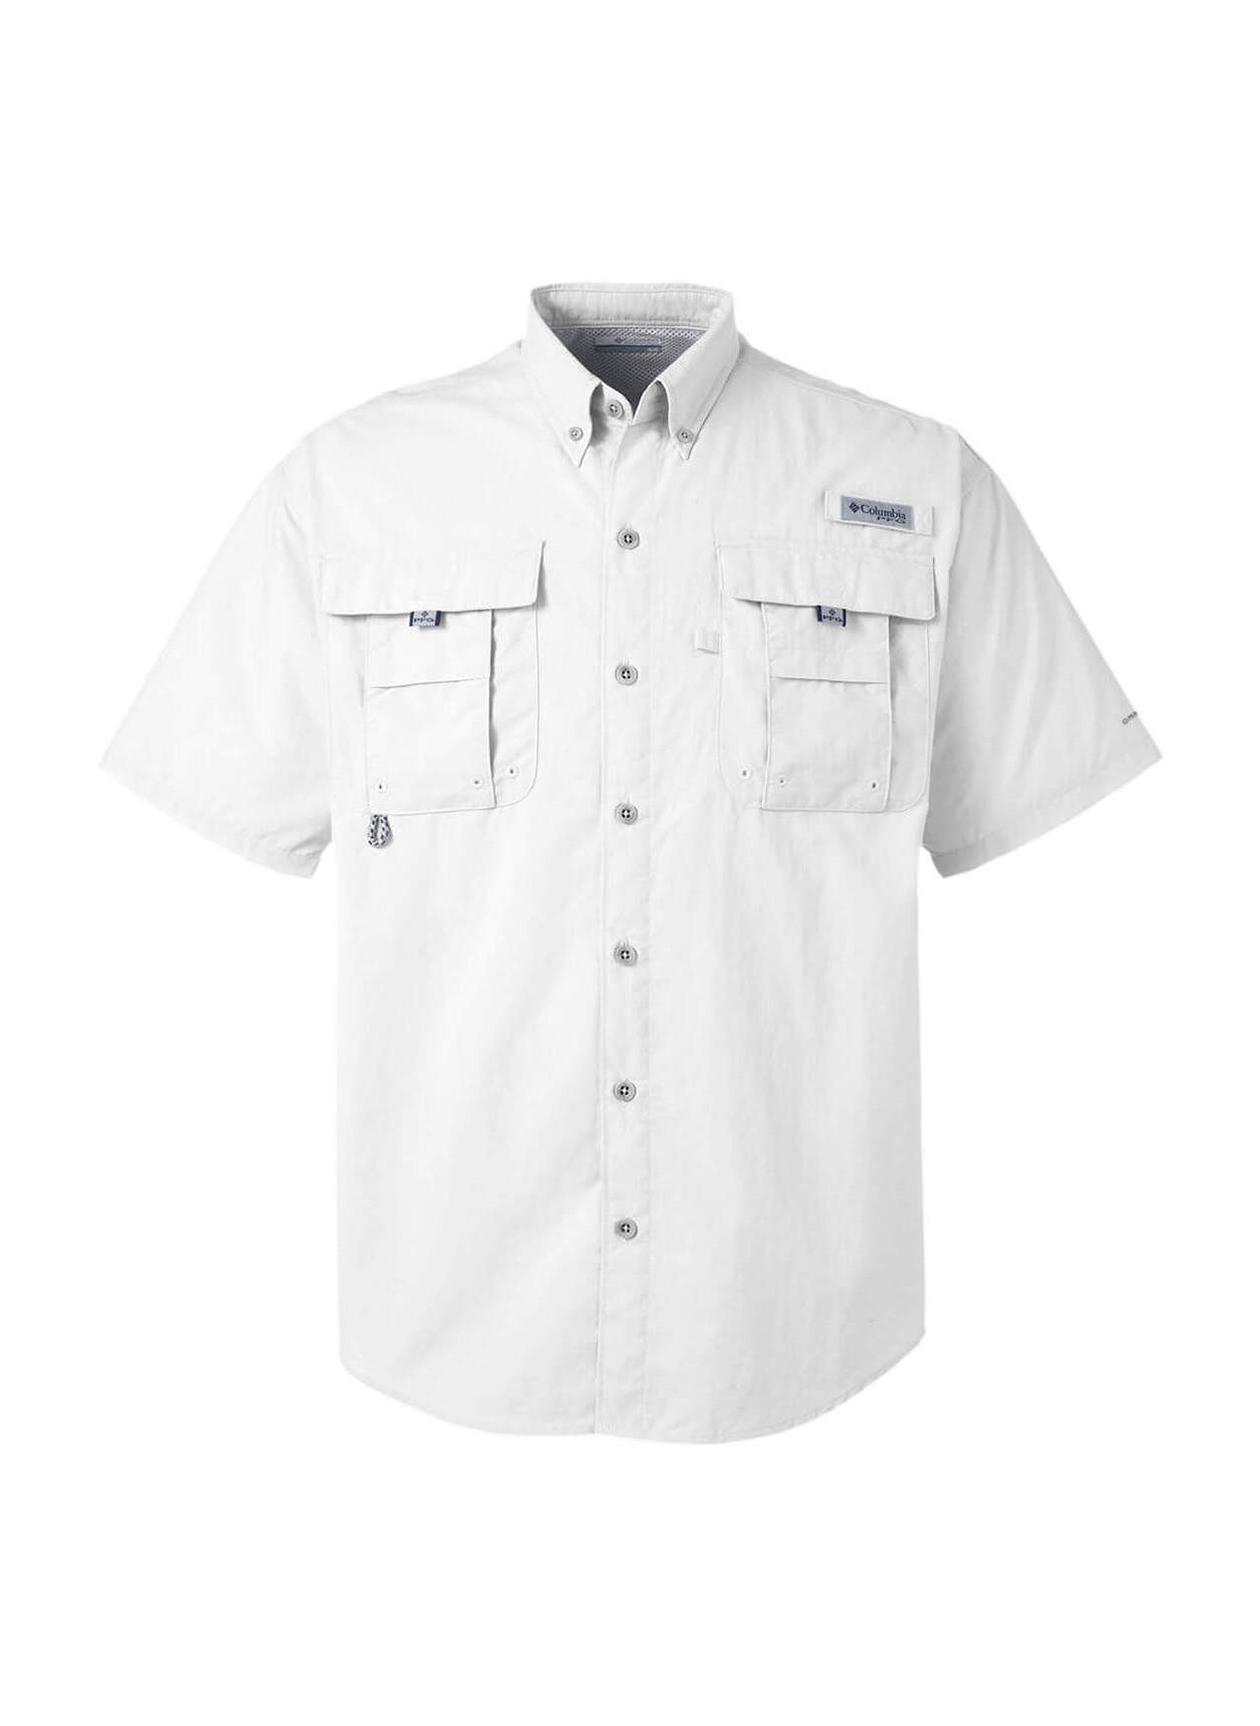 Mens columbia white shirt - Gem